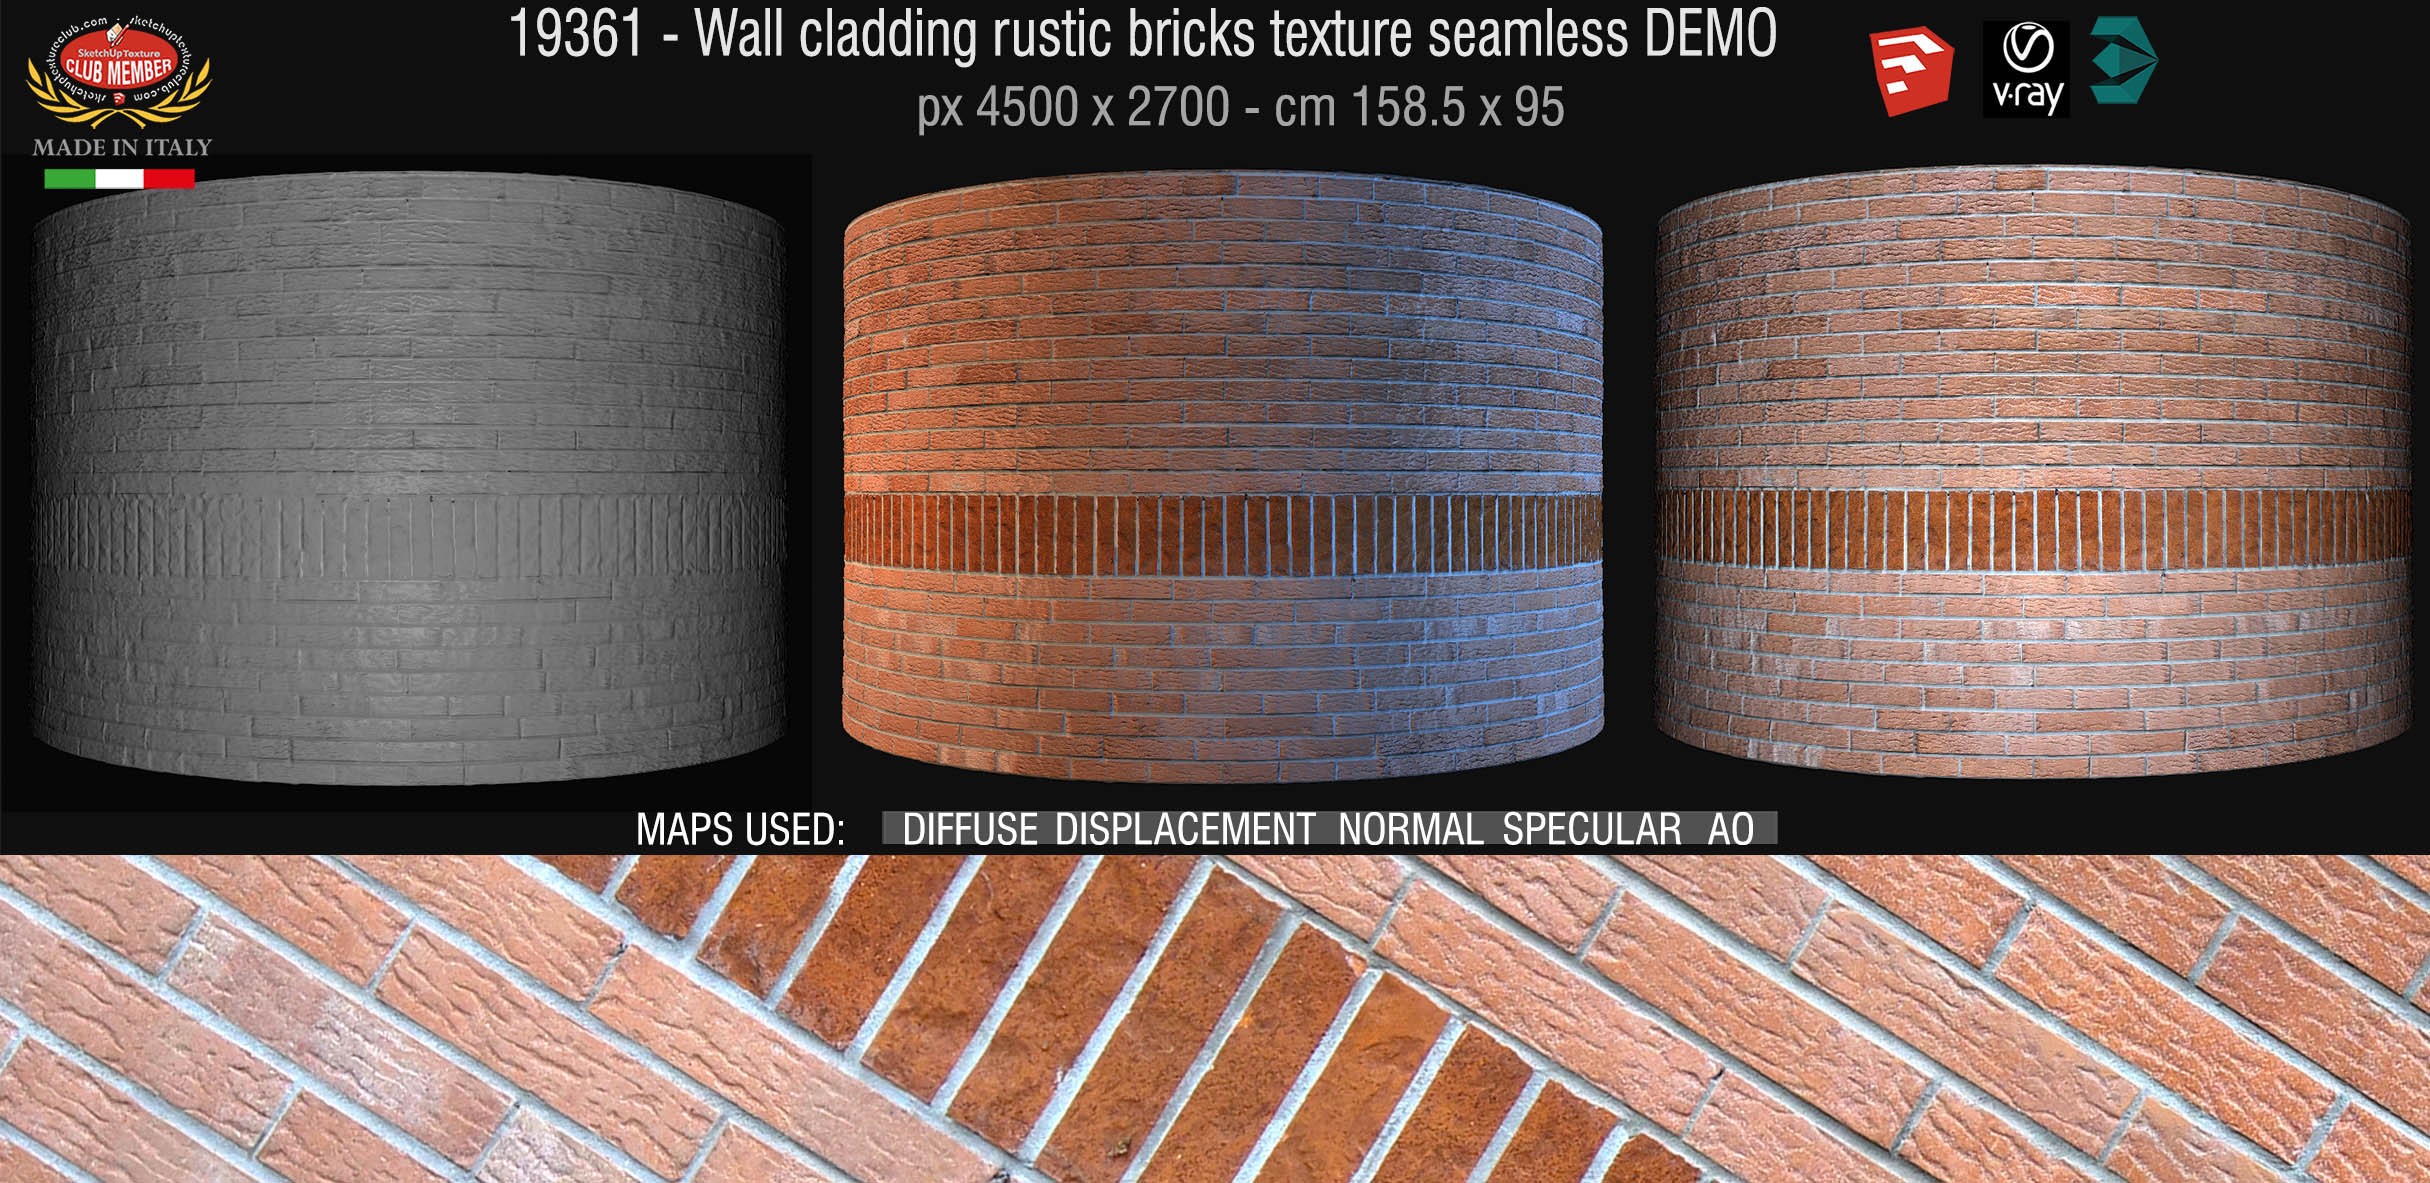 19361 seamless wall cladding rustic bricks texture + maps DEMO